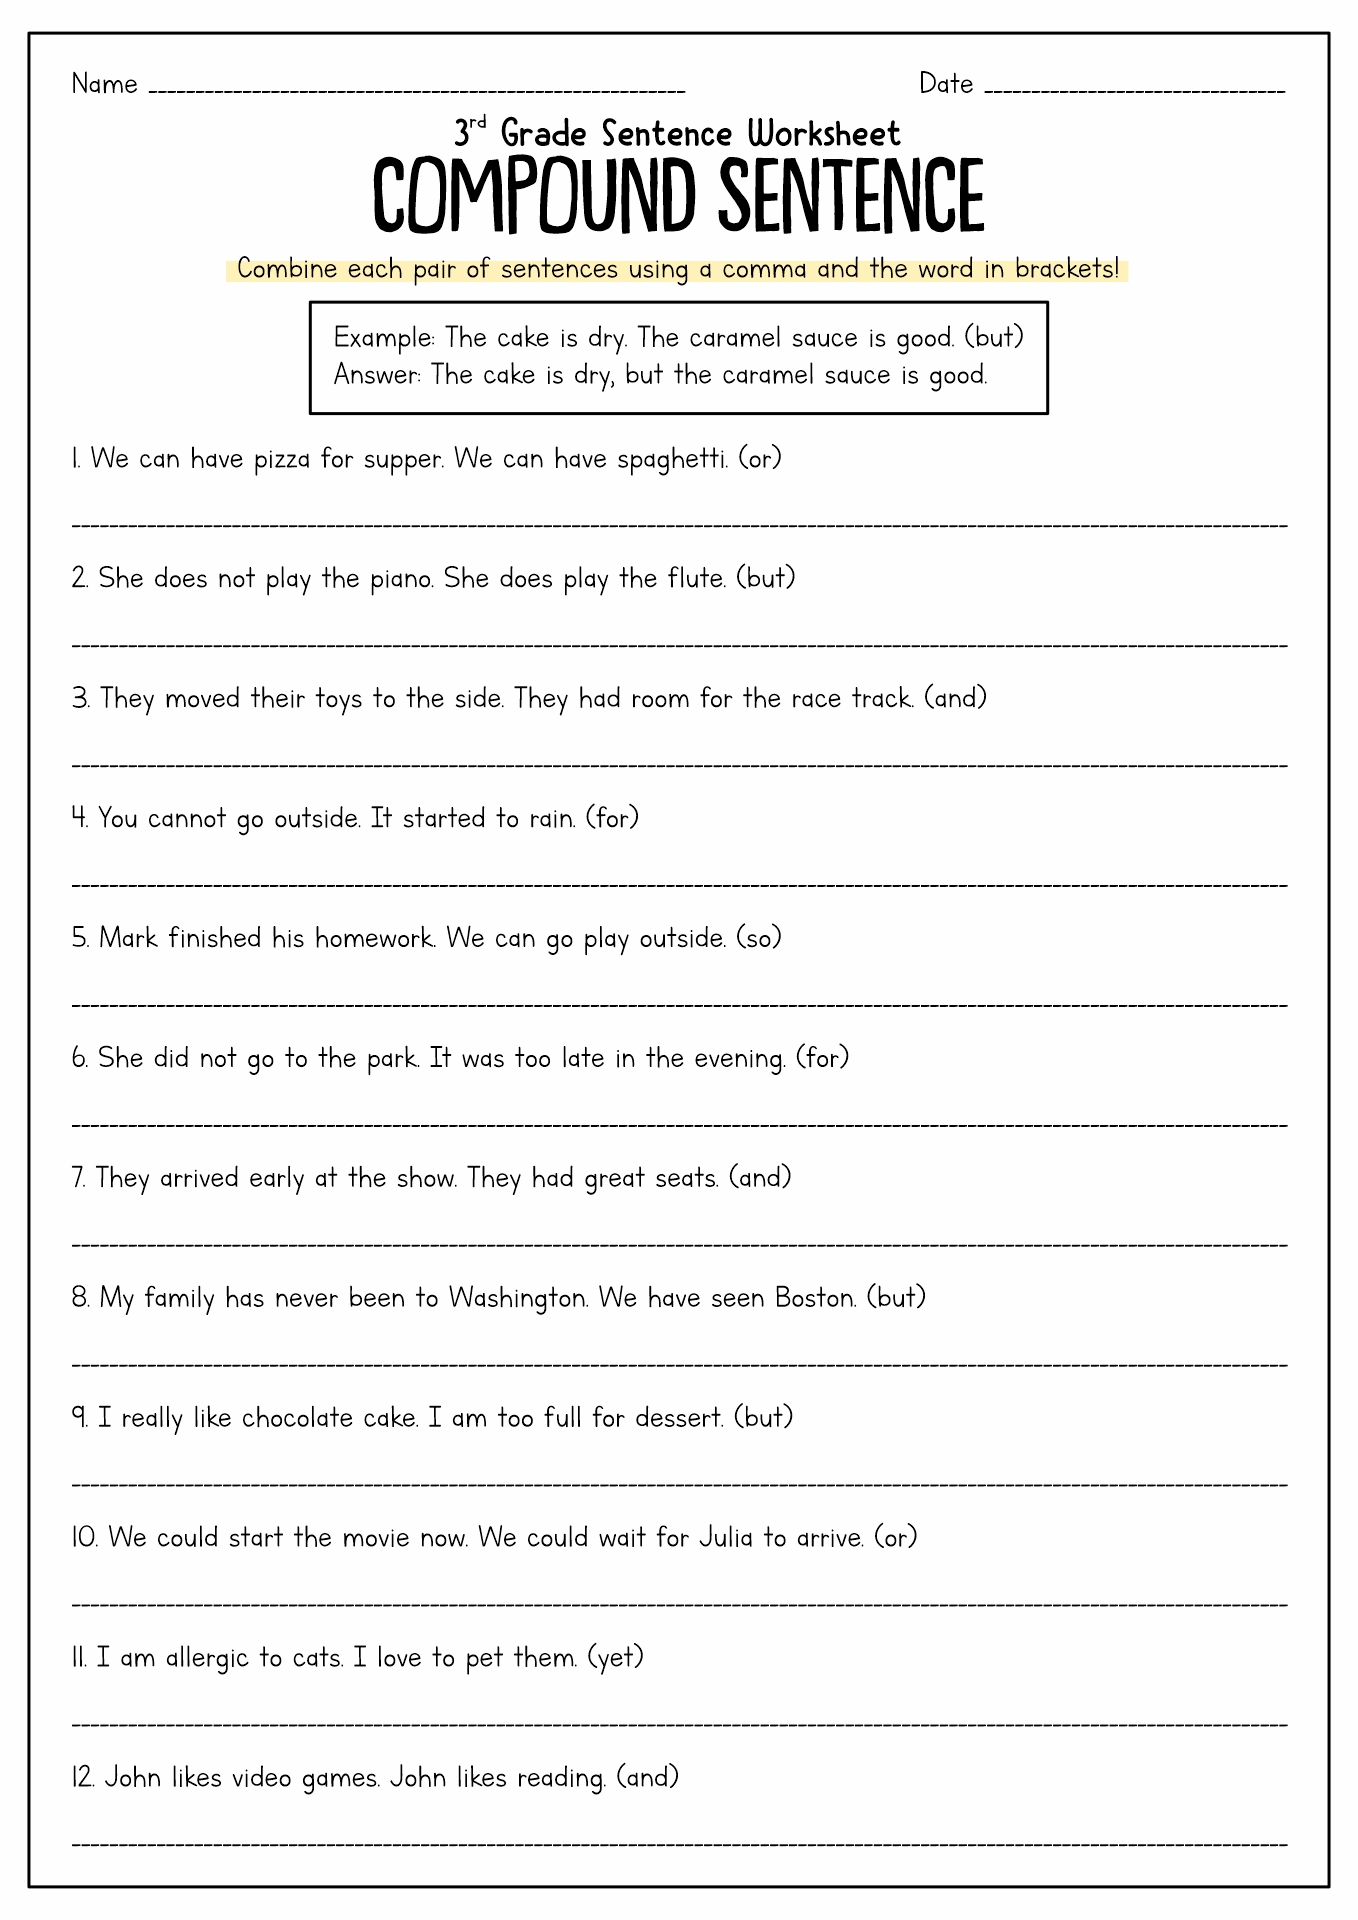 Creating Compound Sentences Worksheets